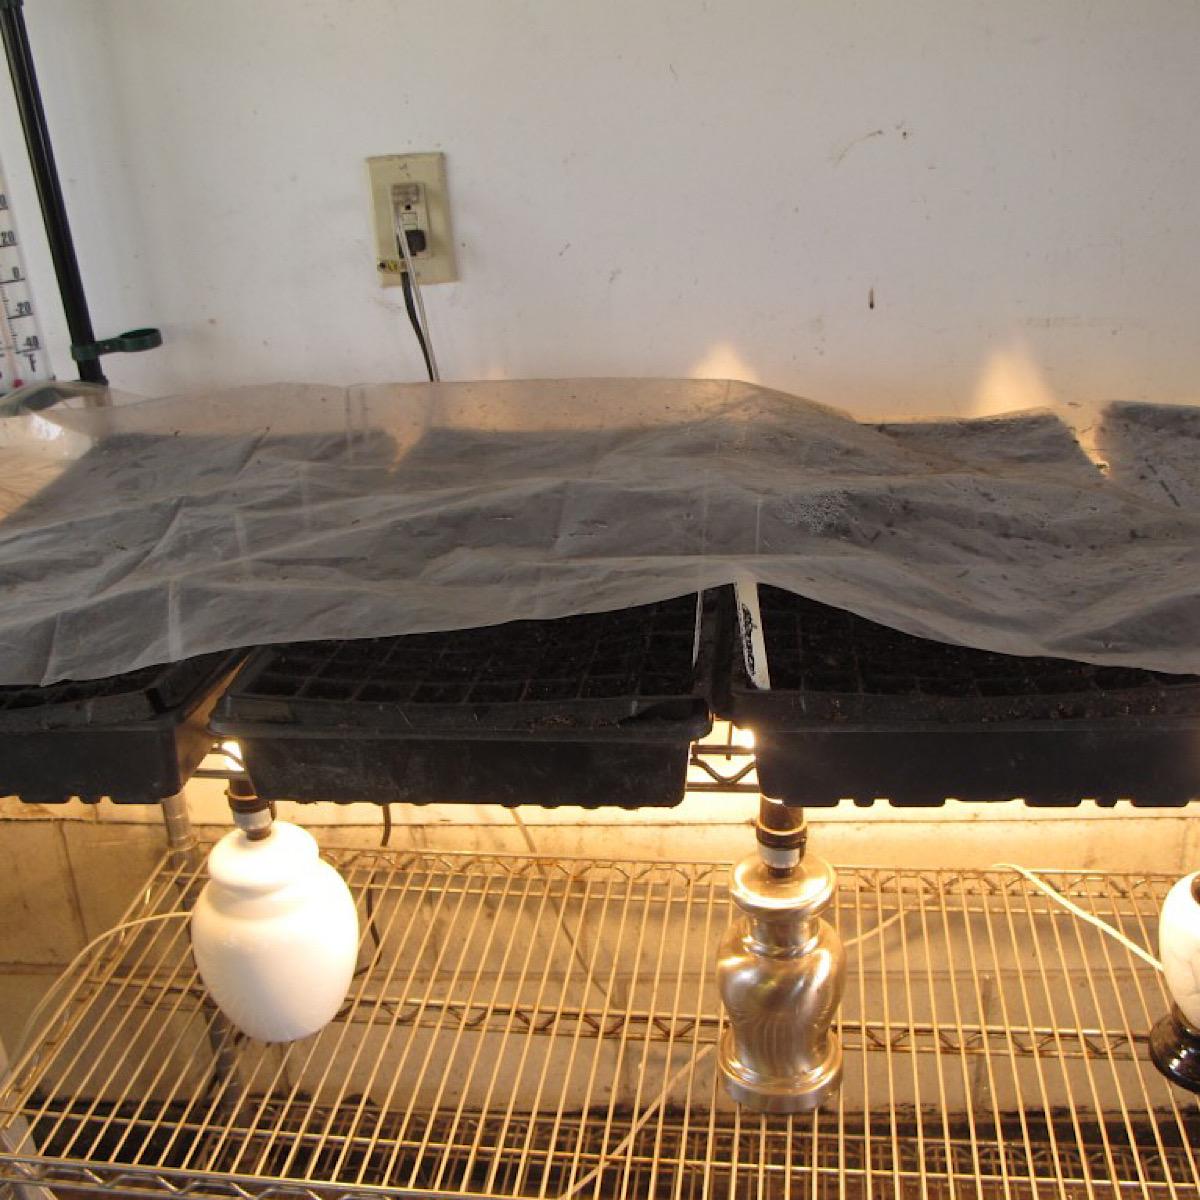 Using 100-watt bulbs for heat source under seed germination trays